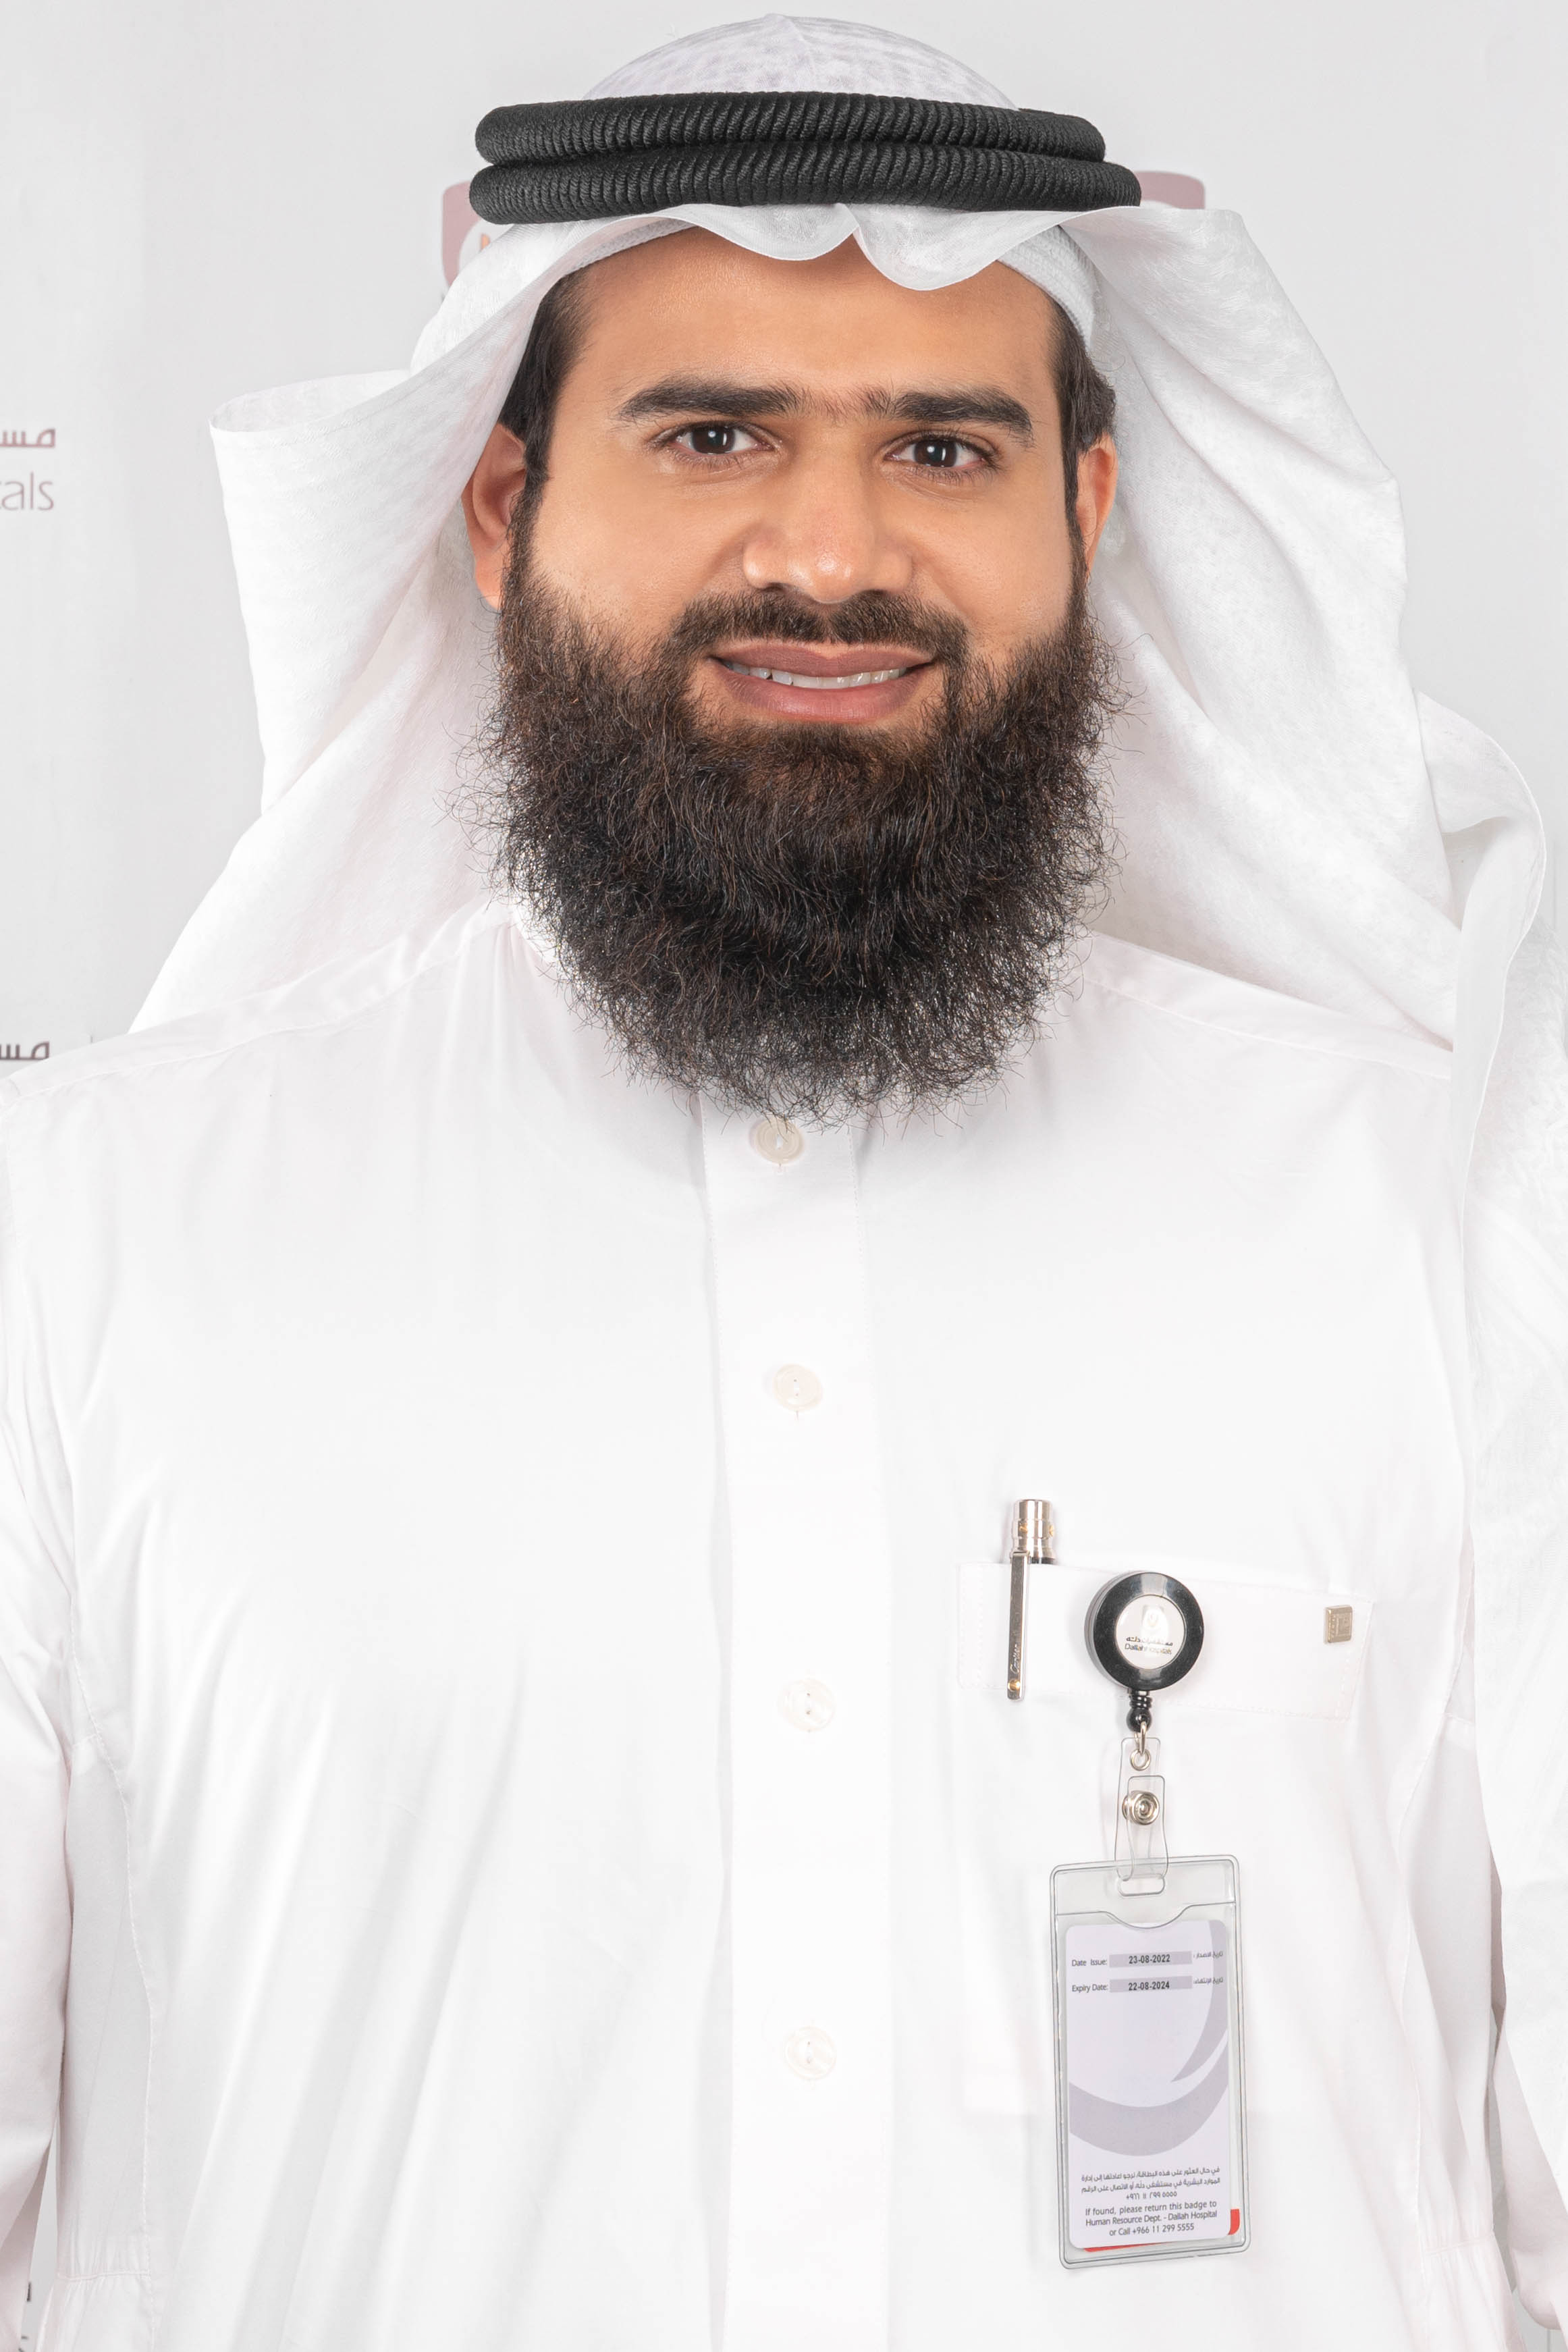 Dr. Jamal Sheikh Omer